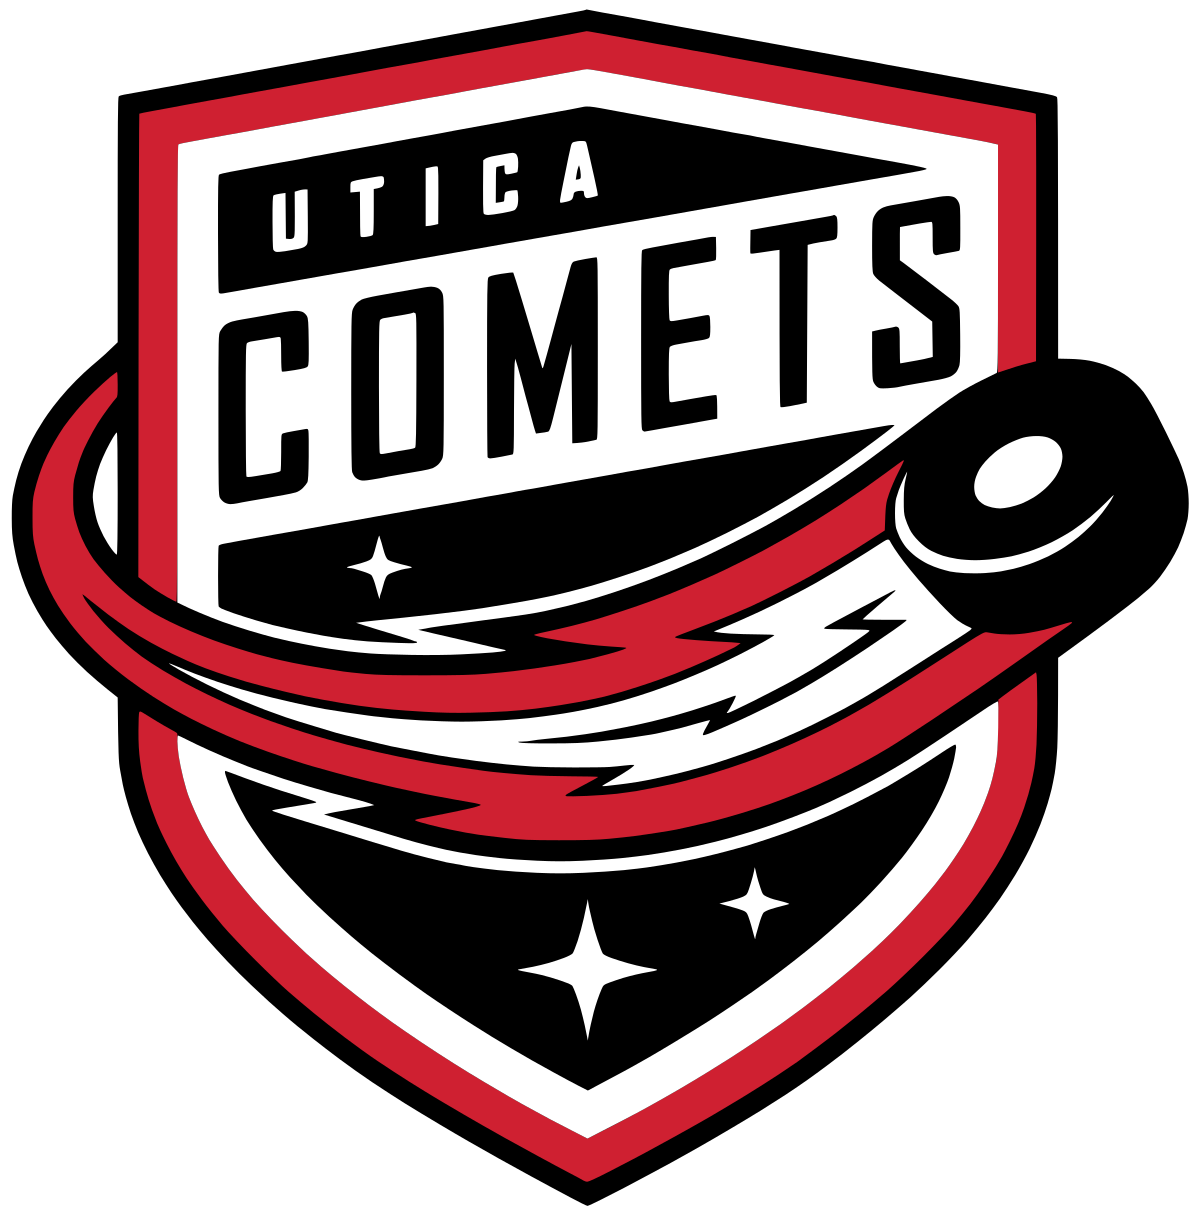 Jeremy Welsh - Utica Comets Photo